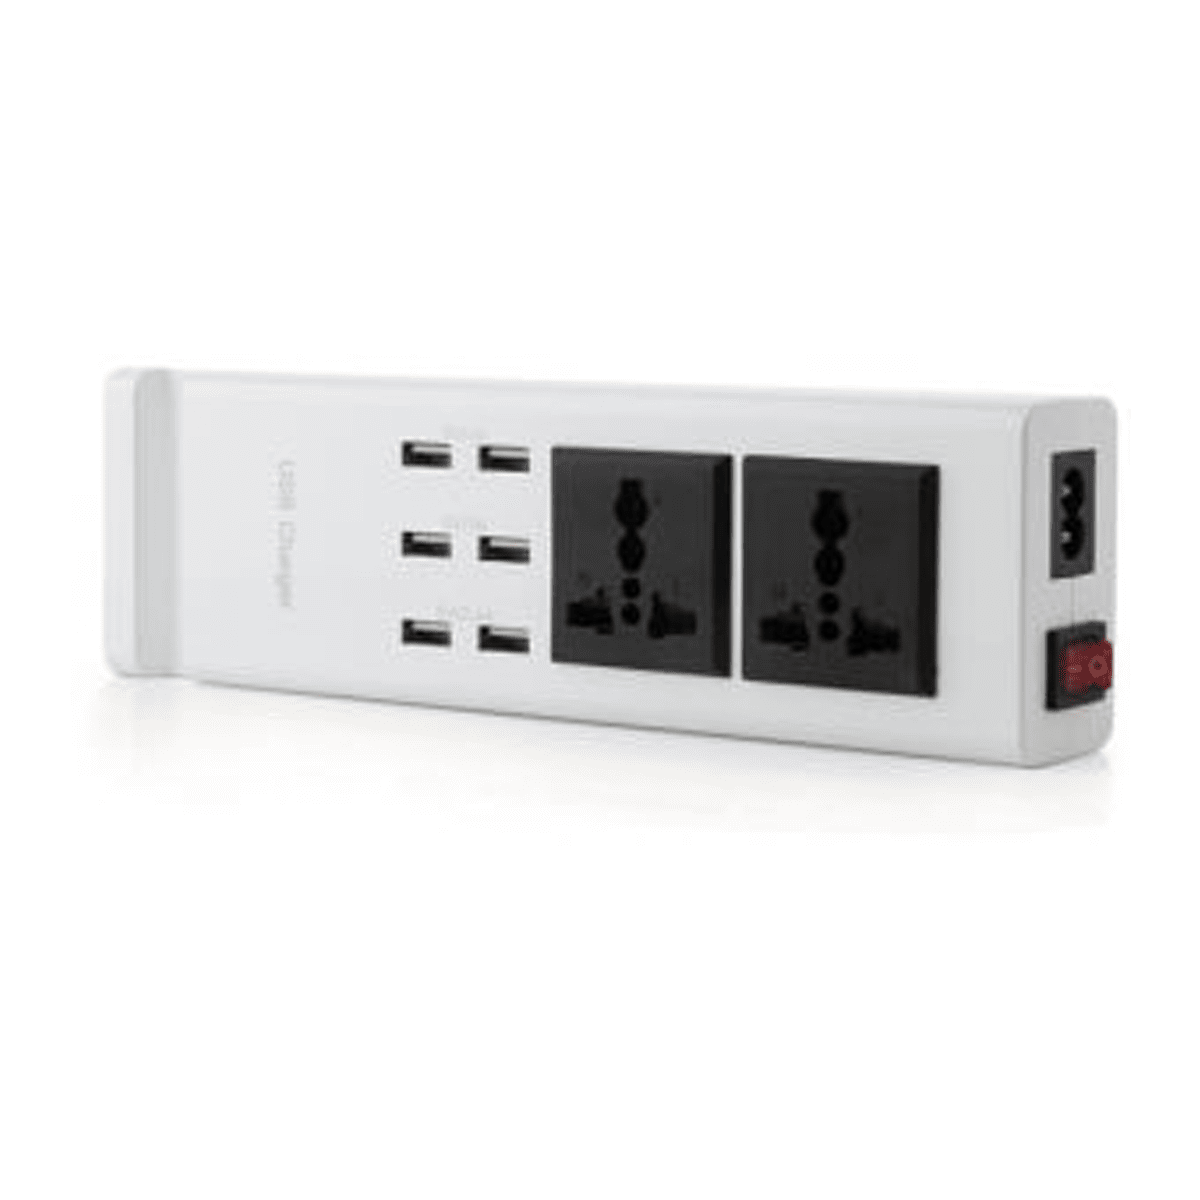 Pandora Box YC-CDA8 for USB Power Adapter, 4 port